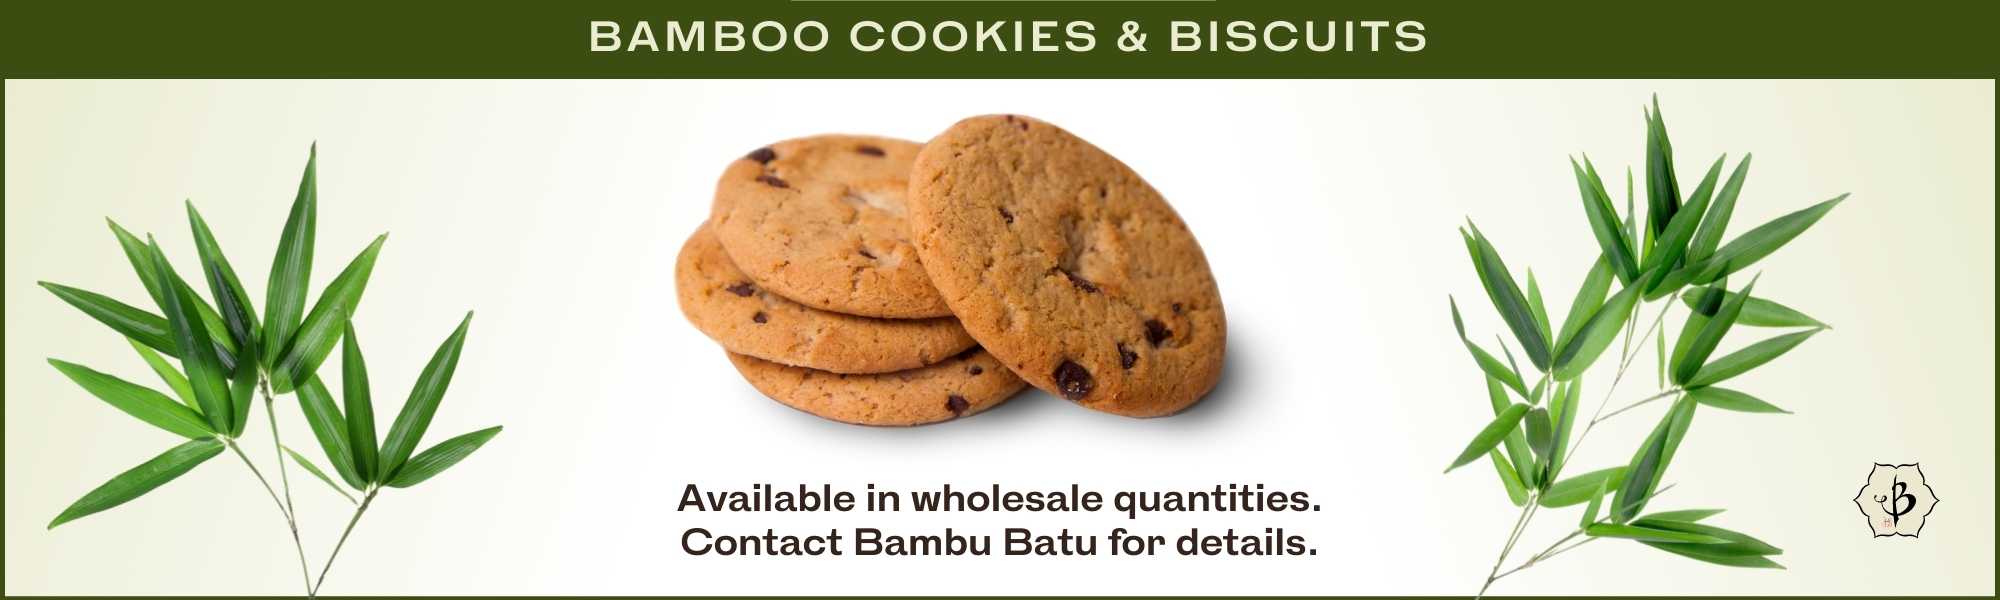 Bamboo cookies banner